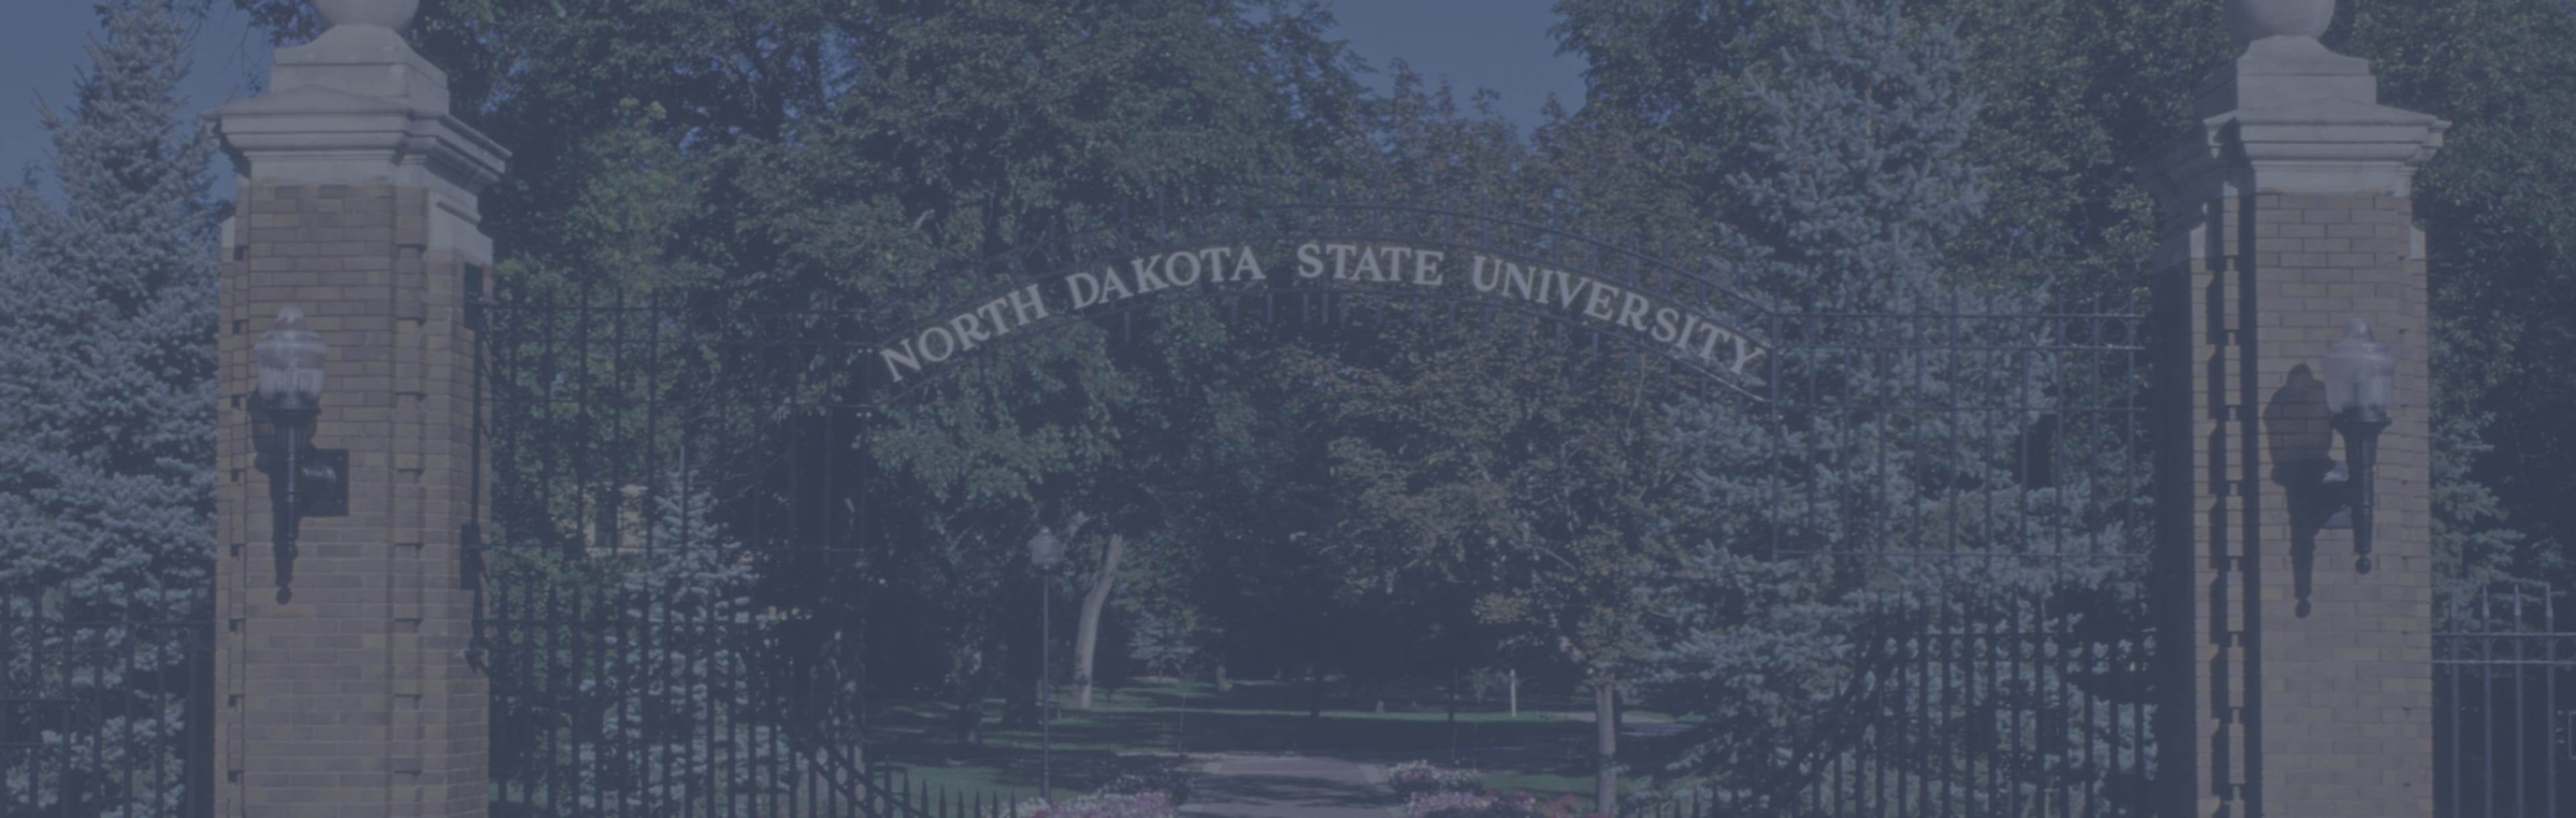 North Dakota State University - Graduate School ปริญญาเอก สาขาวิศวกรรมเกษตรและชีวภาพ